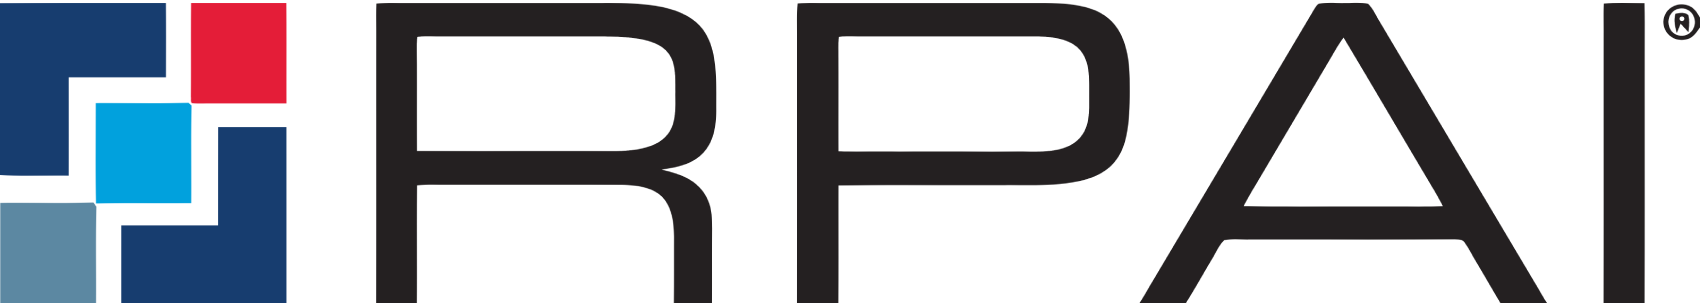 Retail Properties of America logo large (transparent PNG)